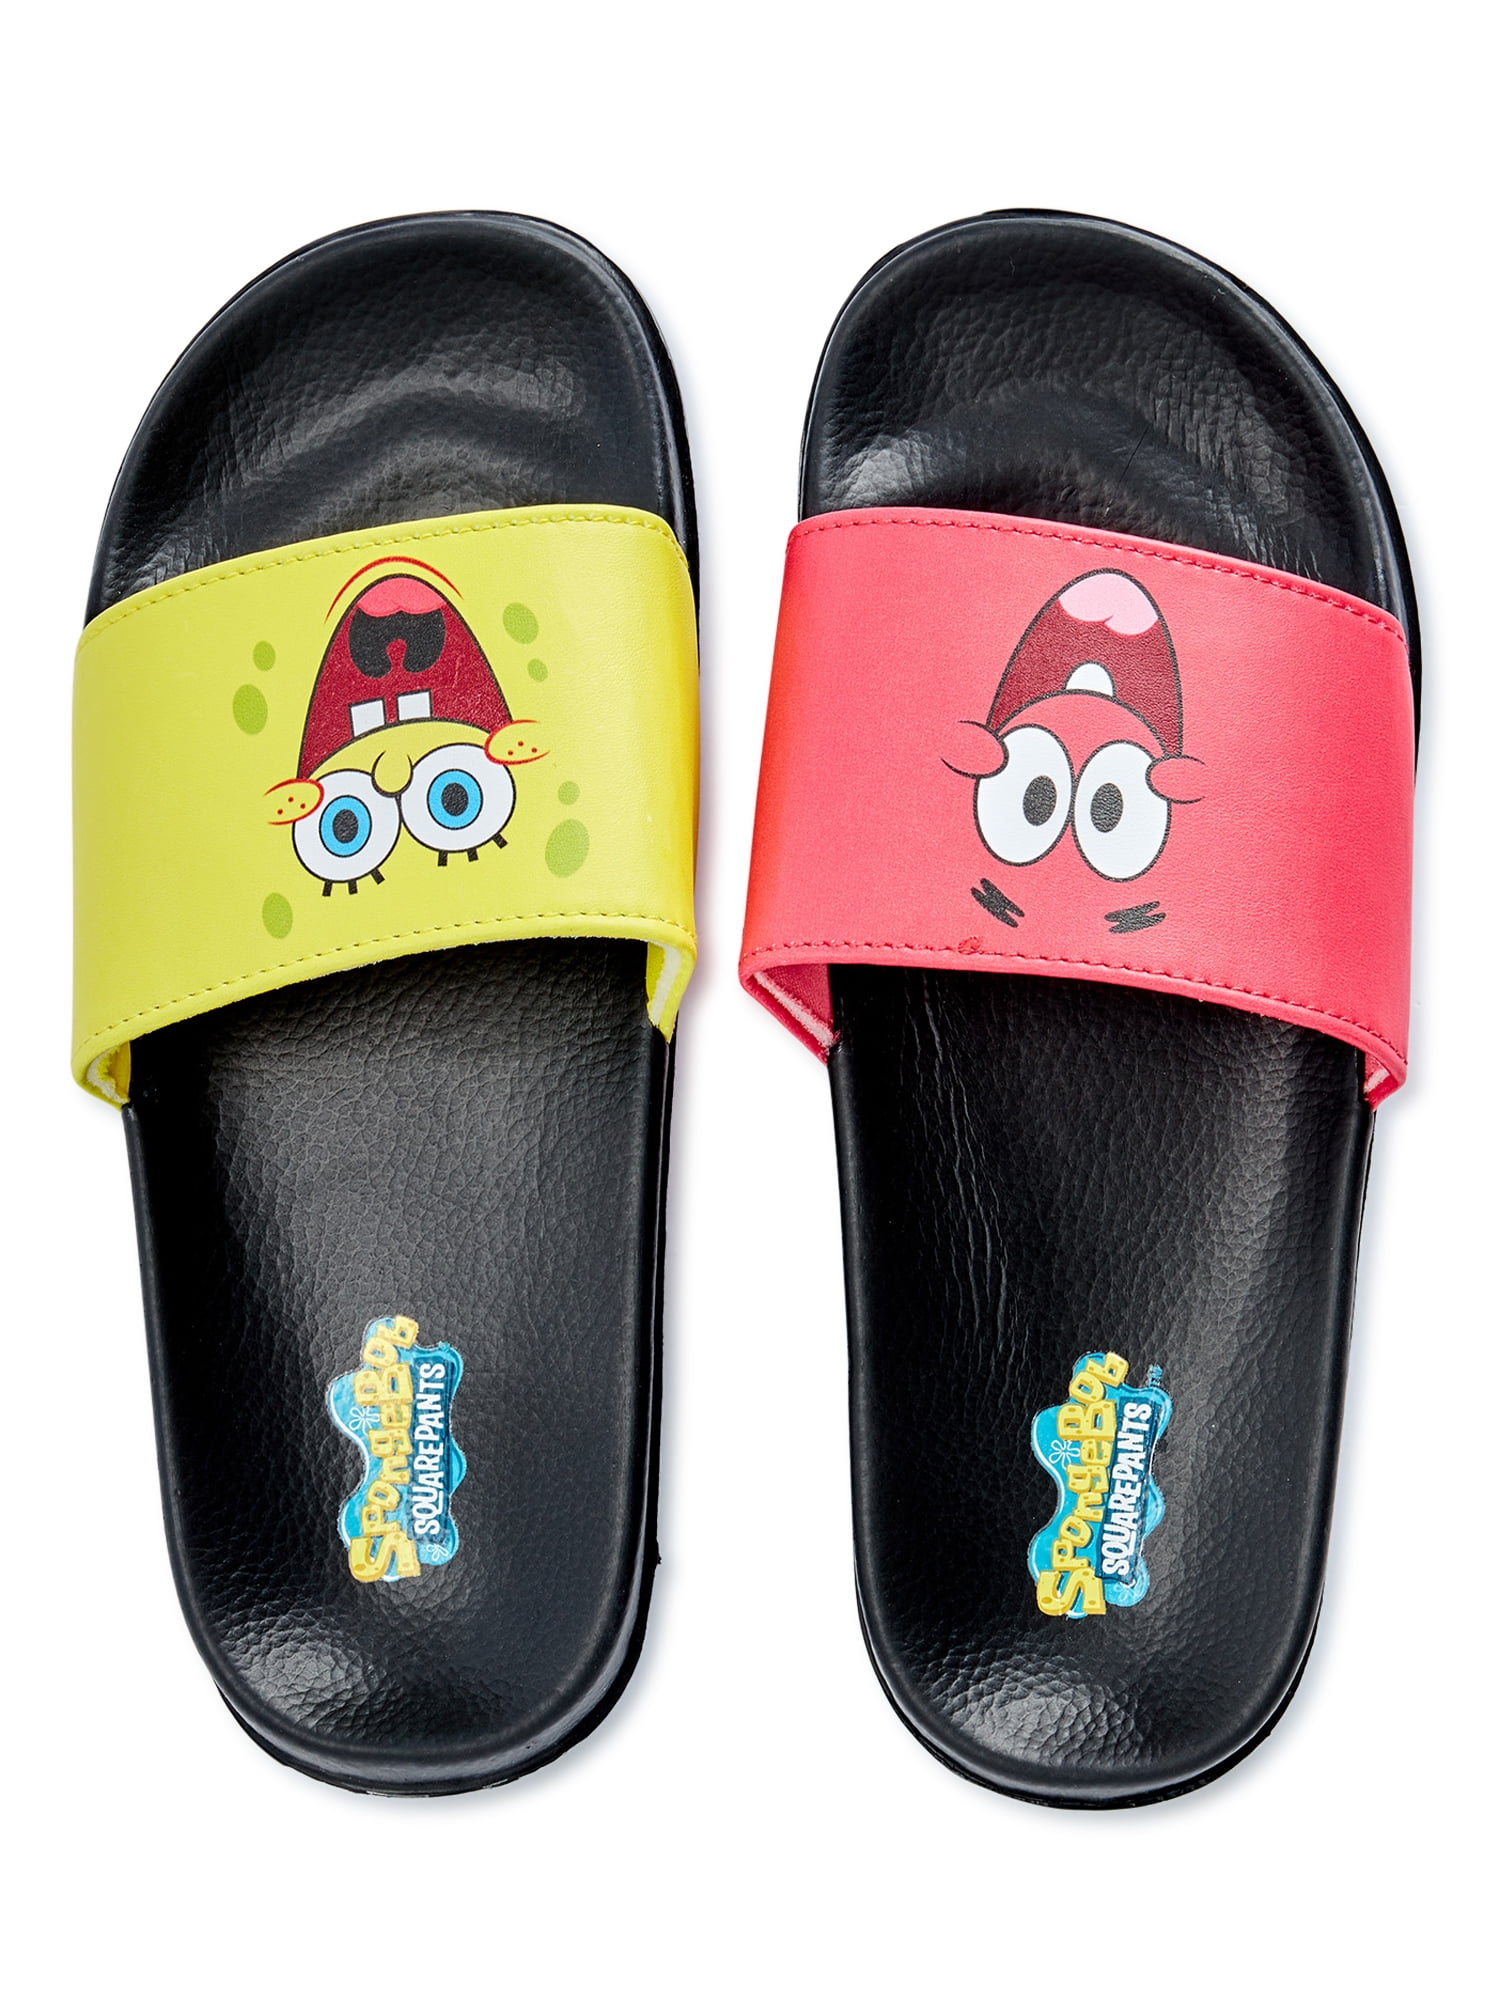 SpongeBob and Patrick Boy’s Slide Sandals - Walmart.com